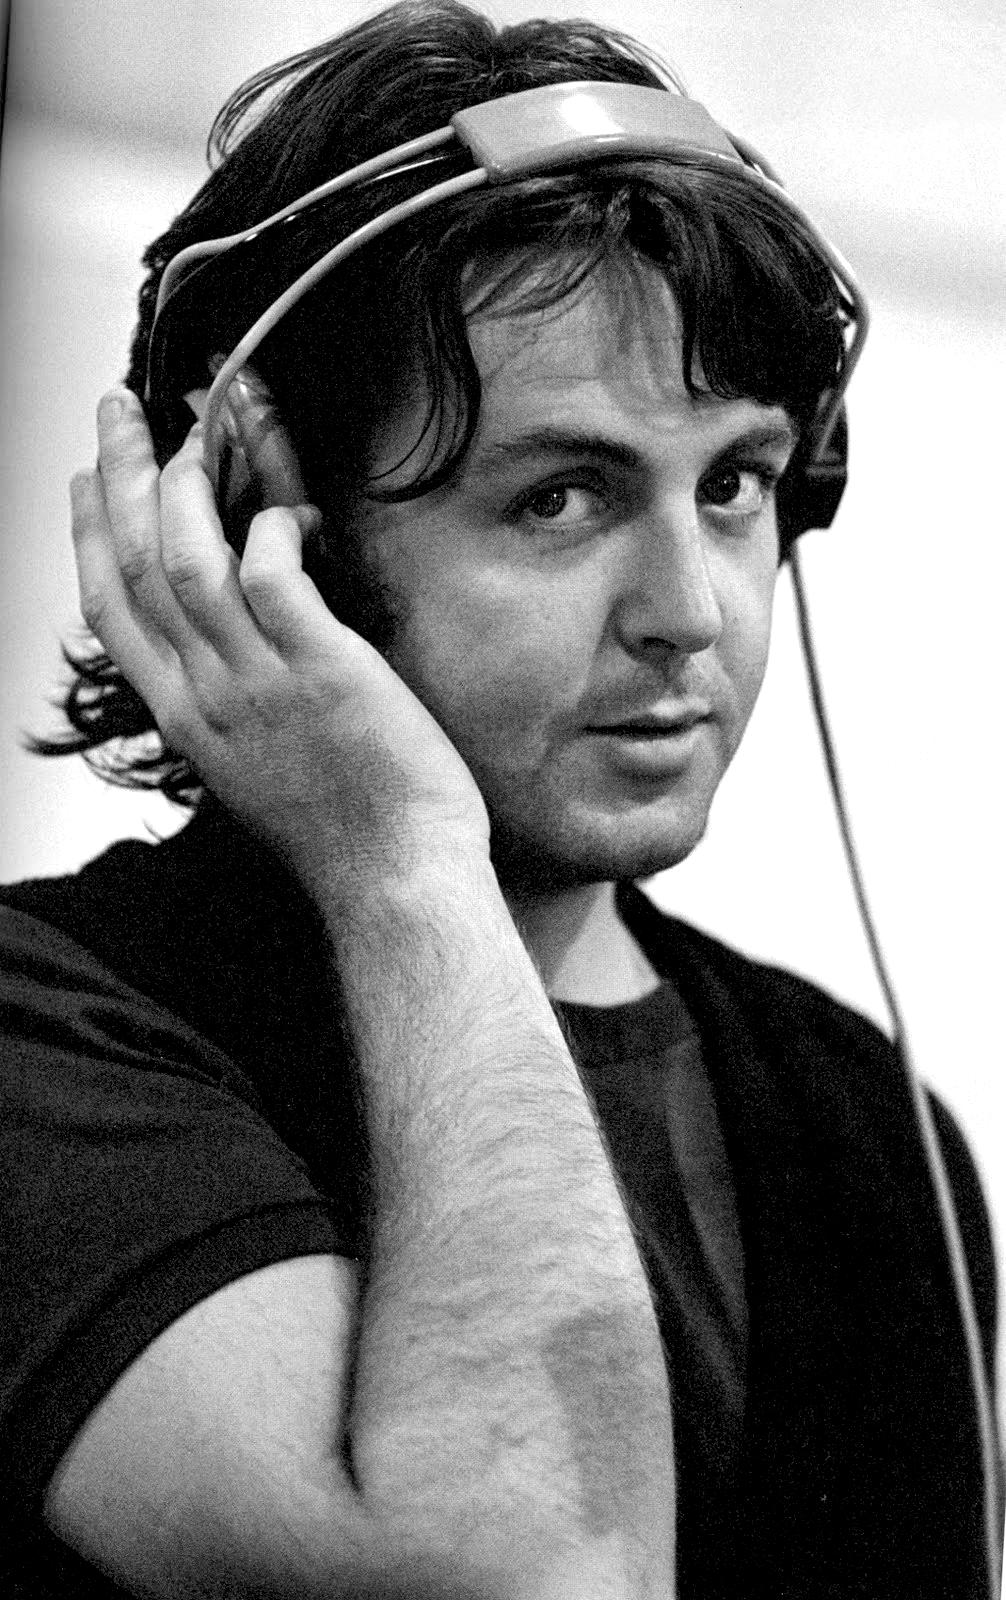 Download Paul Mccartney Image [1006x1600]. Paul McCartney